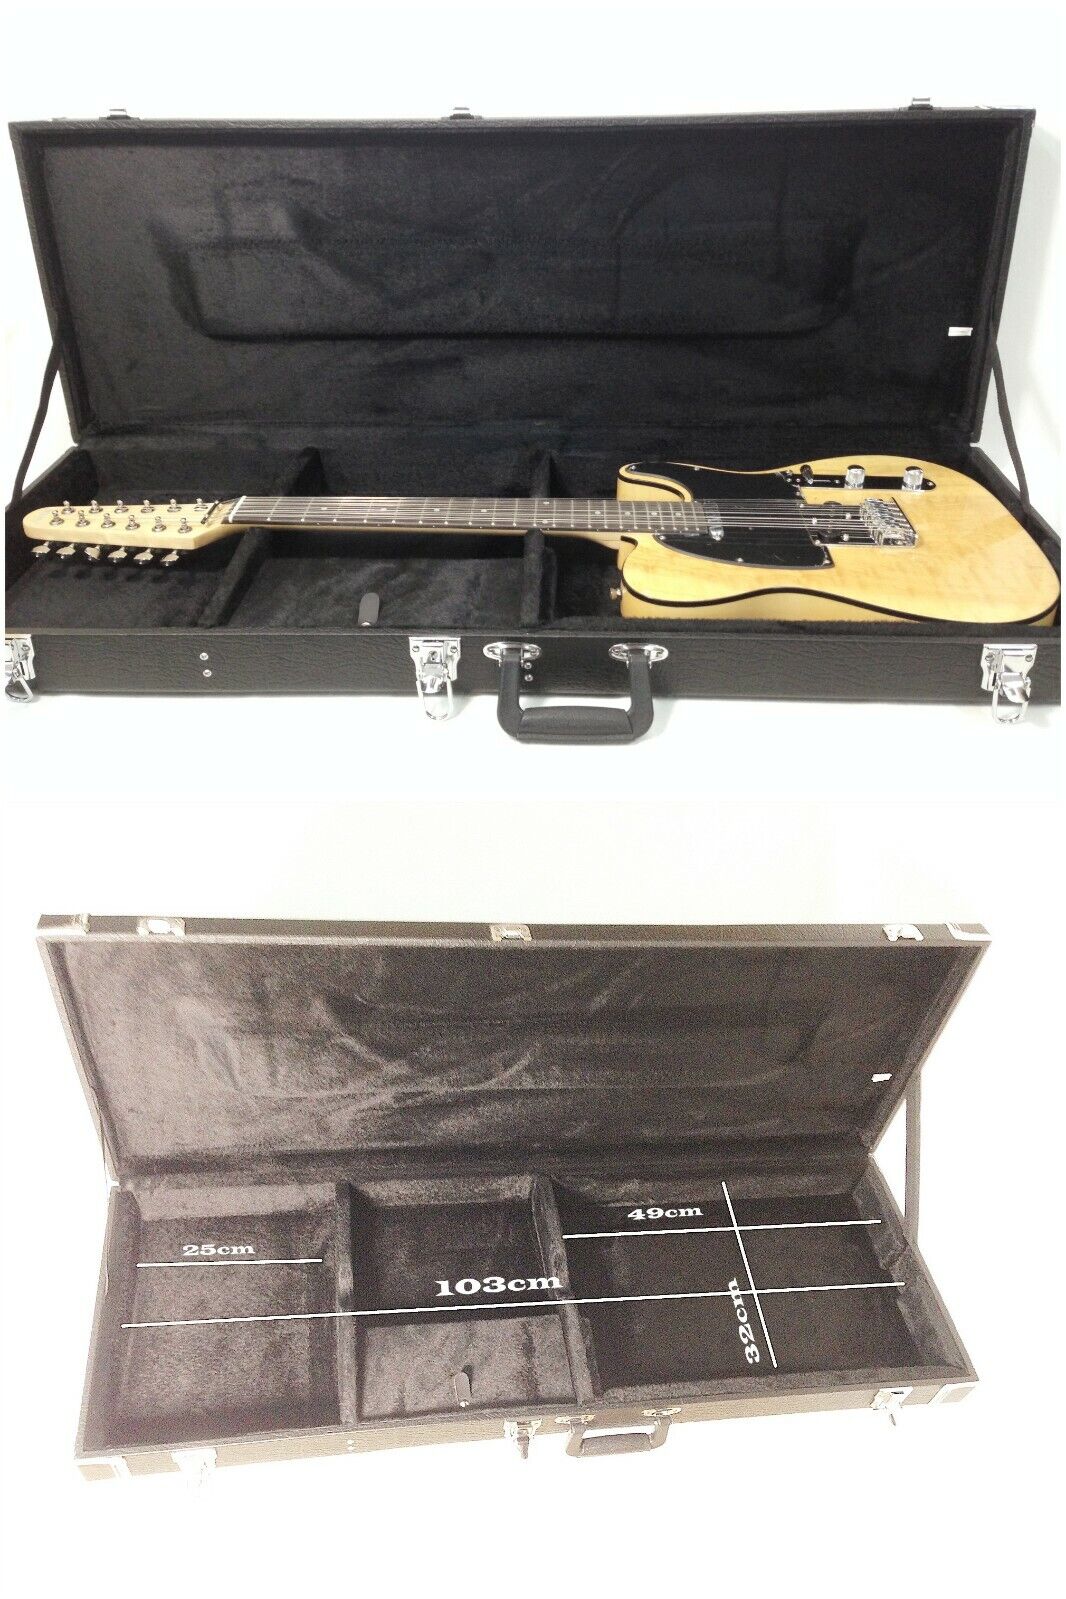 Haze HPAG19040STA12S Rectangle Electric Guitar Hard Case, Strat/Tele, Lockable, Black